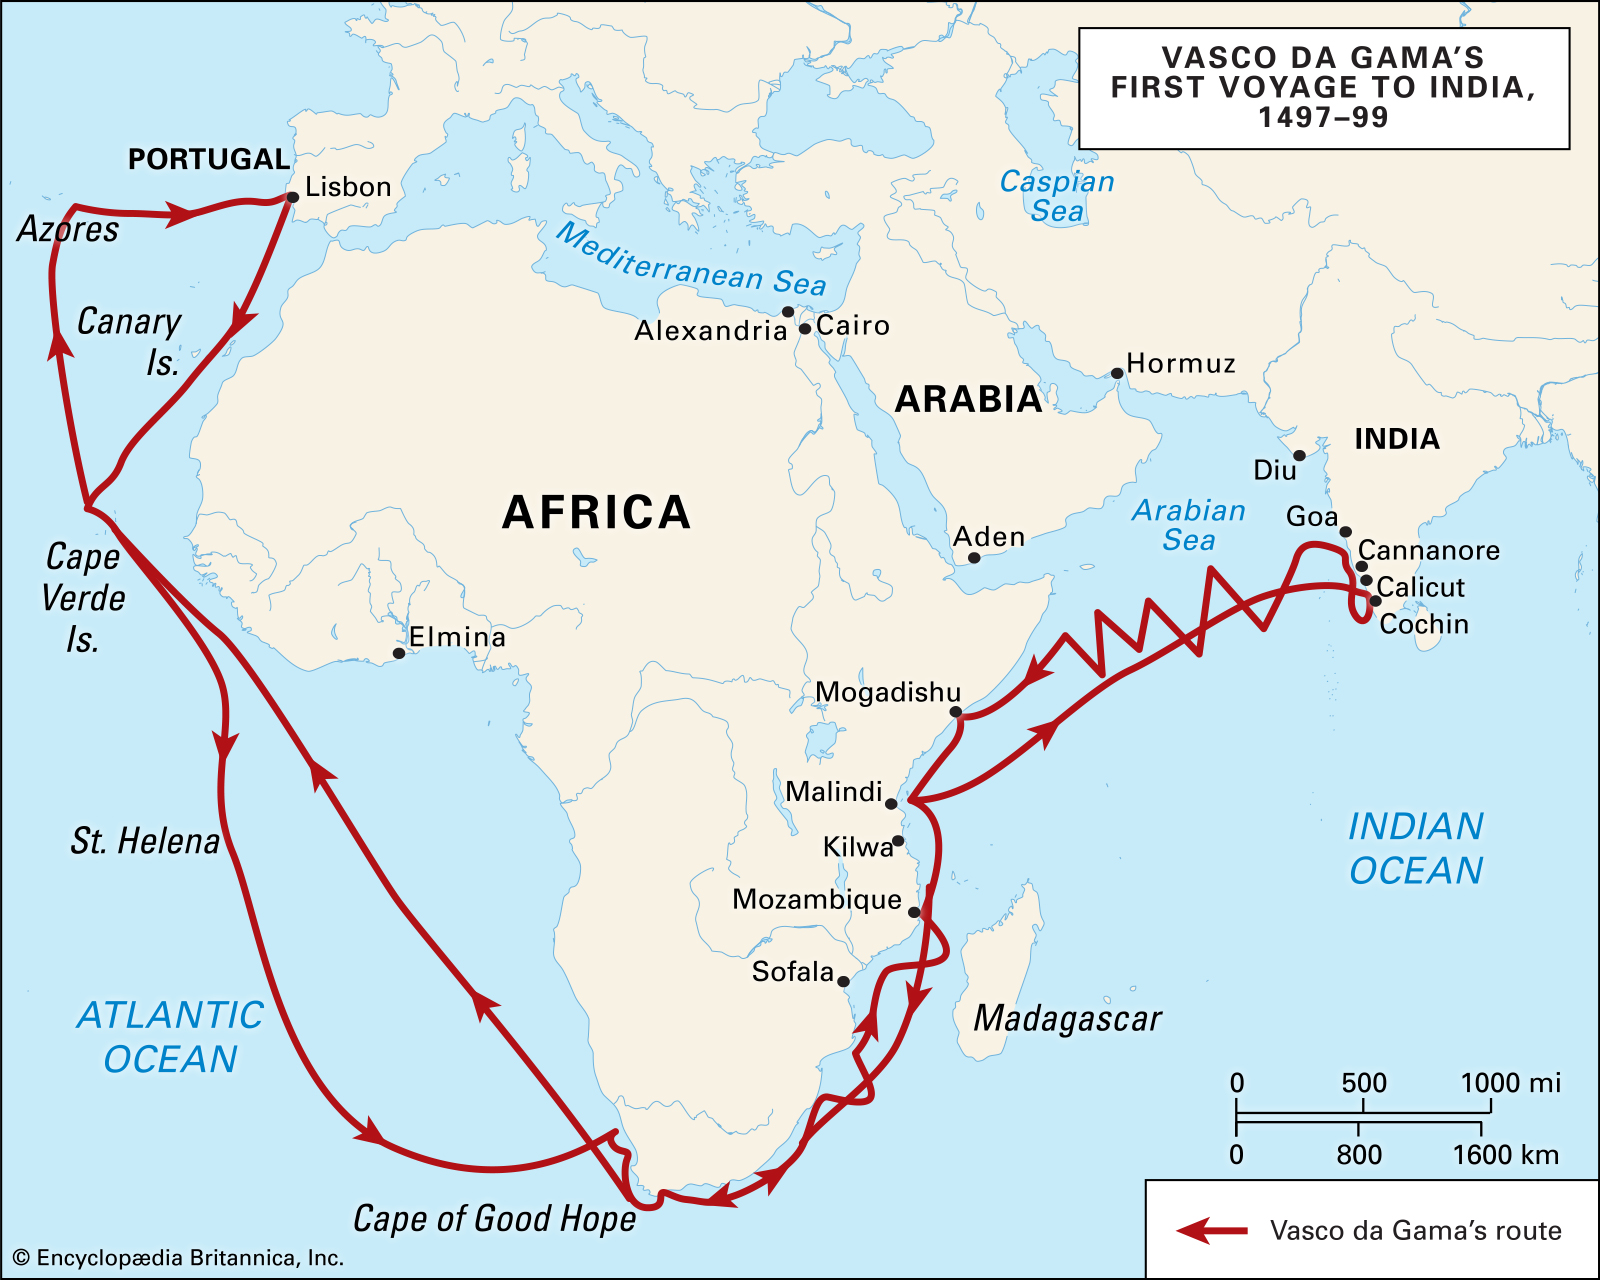 Vasco da Gama's Voyage